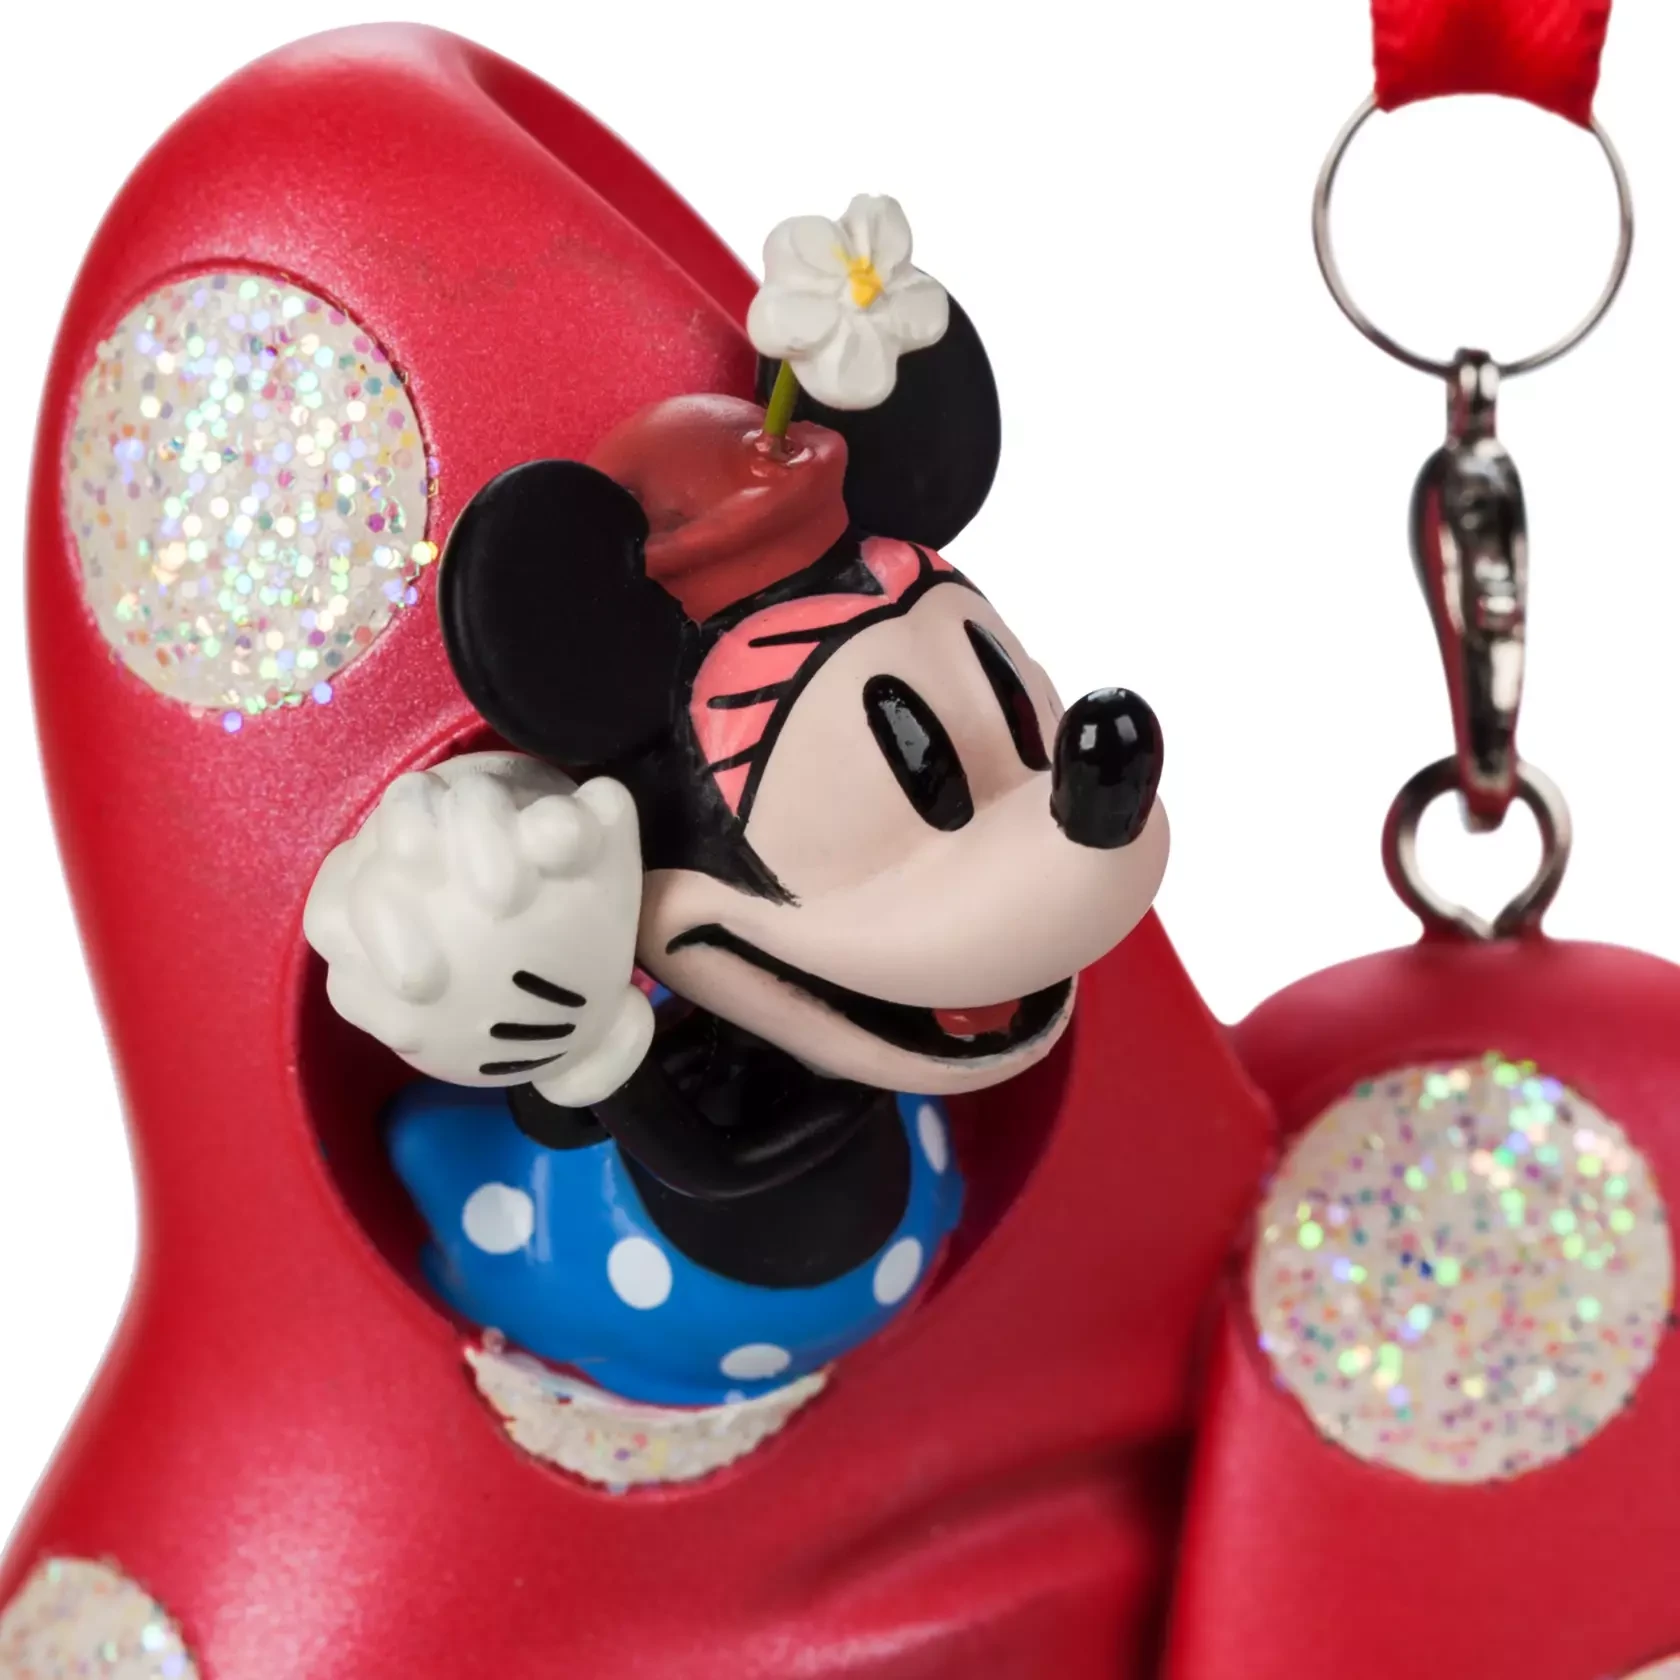 item Ornament - Minnie Mouse Bow - Sketchbook 6506059317363-2fmtwebpqlt70wid1680